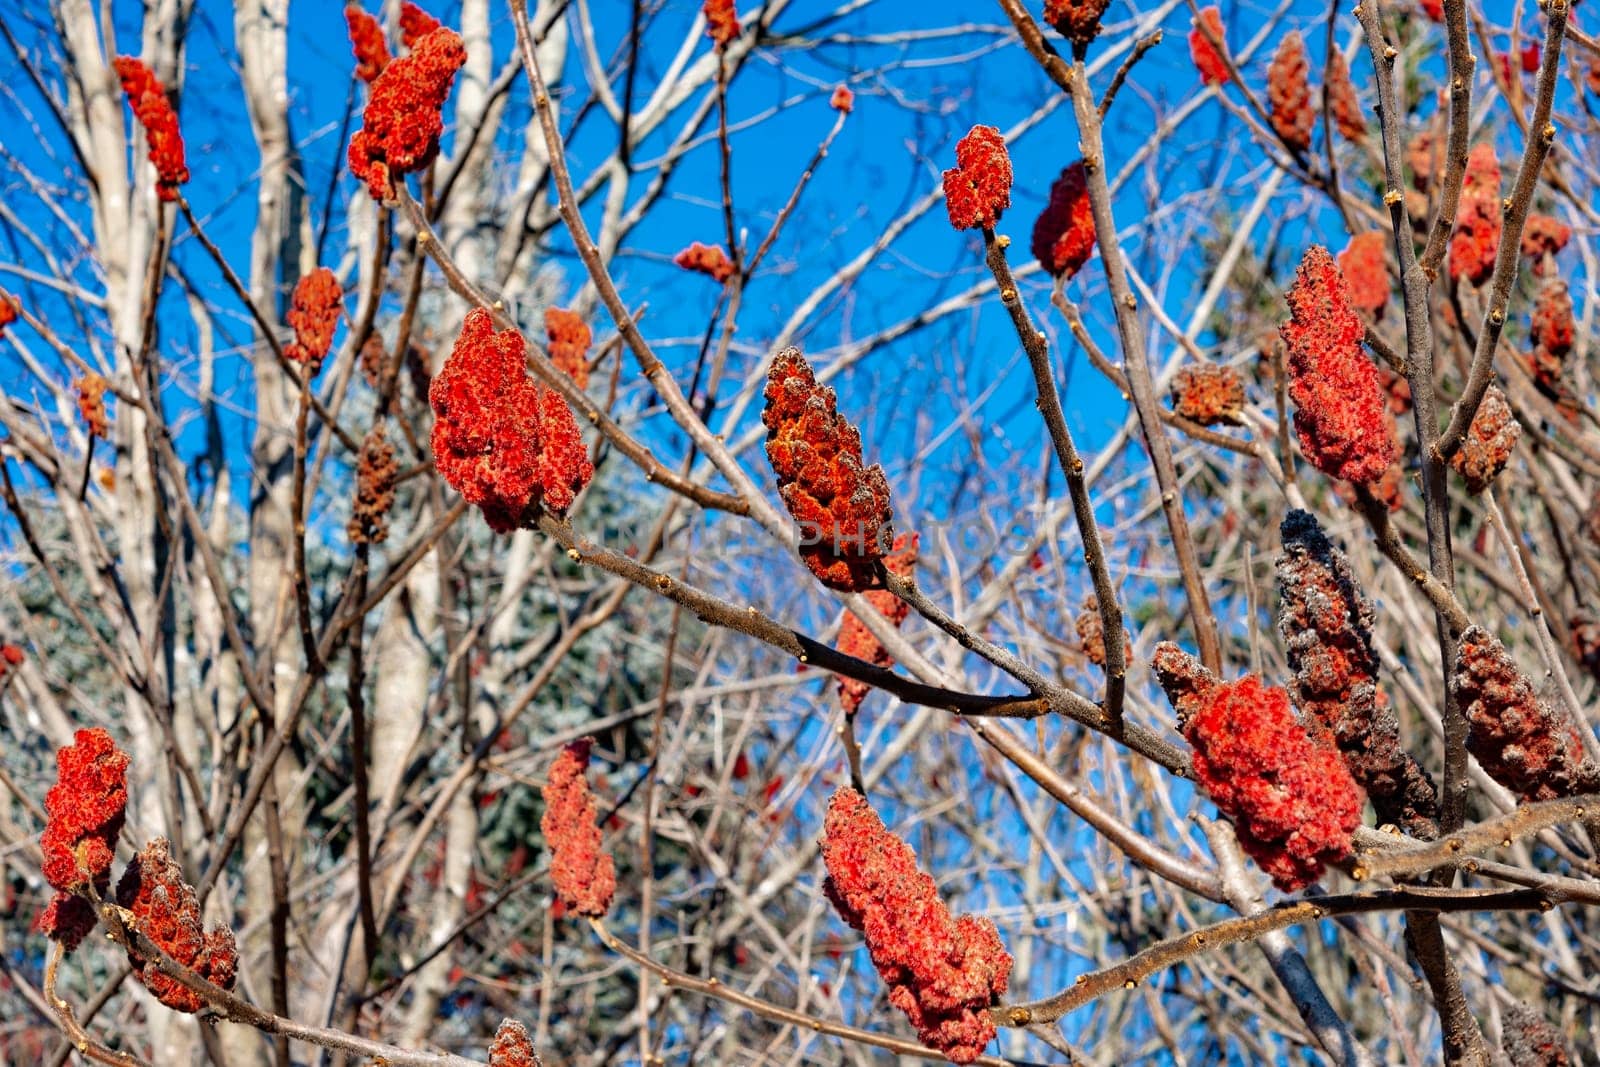 Red Dir Sumac fruits near the park road against the blue sky